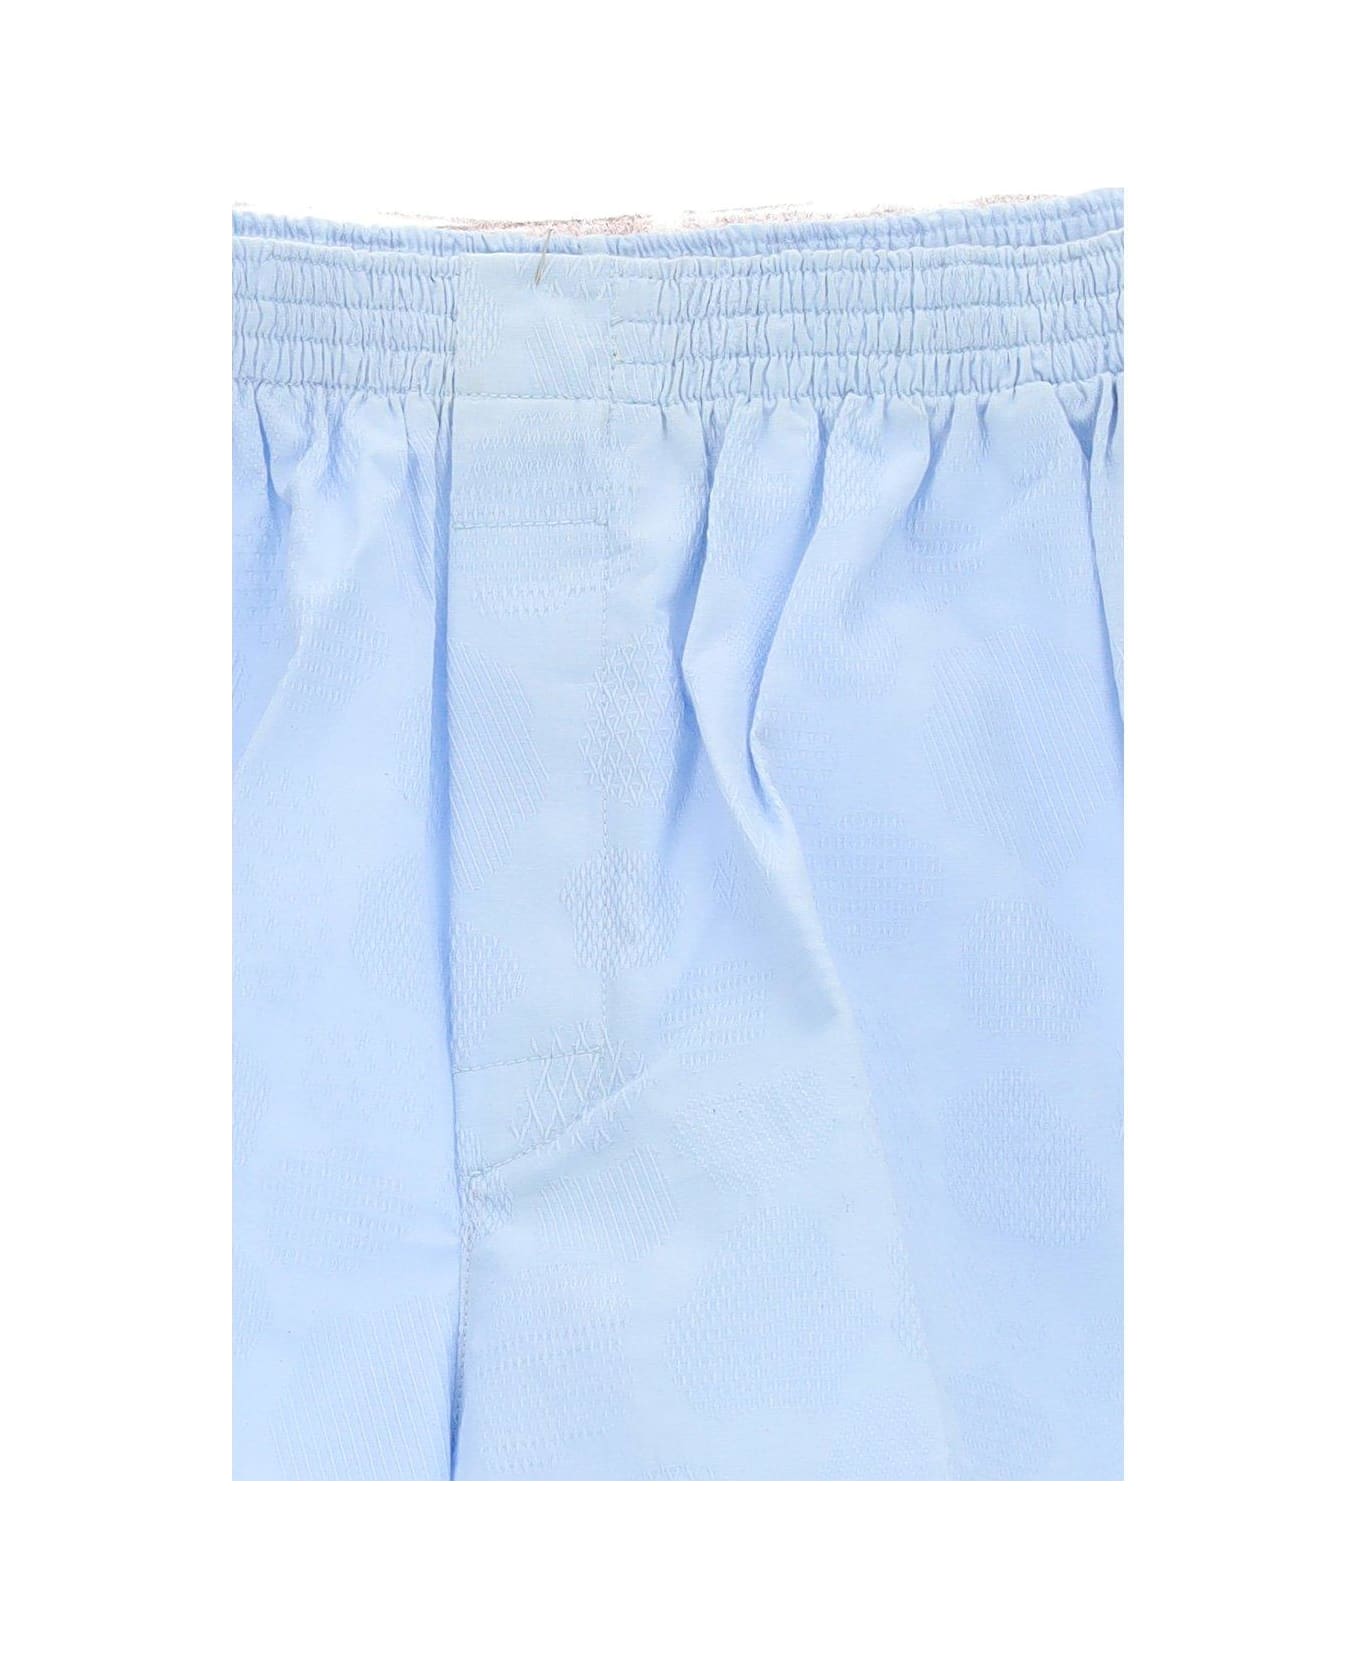 Chloé Boxer Shorts - PURE BLU ショートパンツ